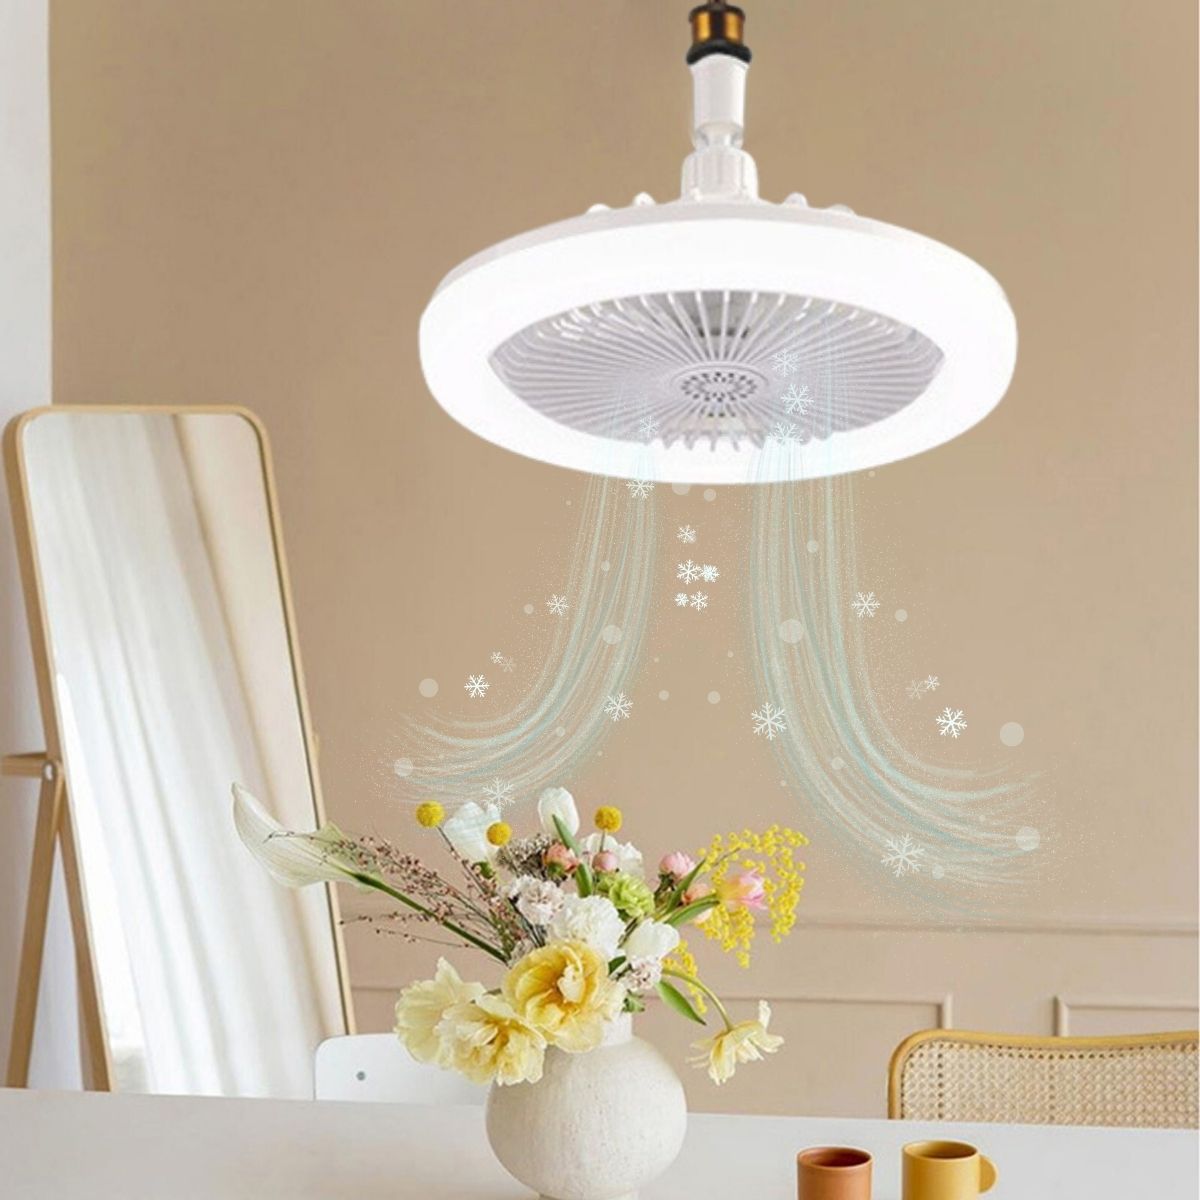 Lâmpada de LED com Ventilador Embutido – Cool Comfort – Santo Stilo